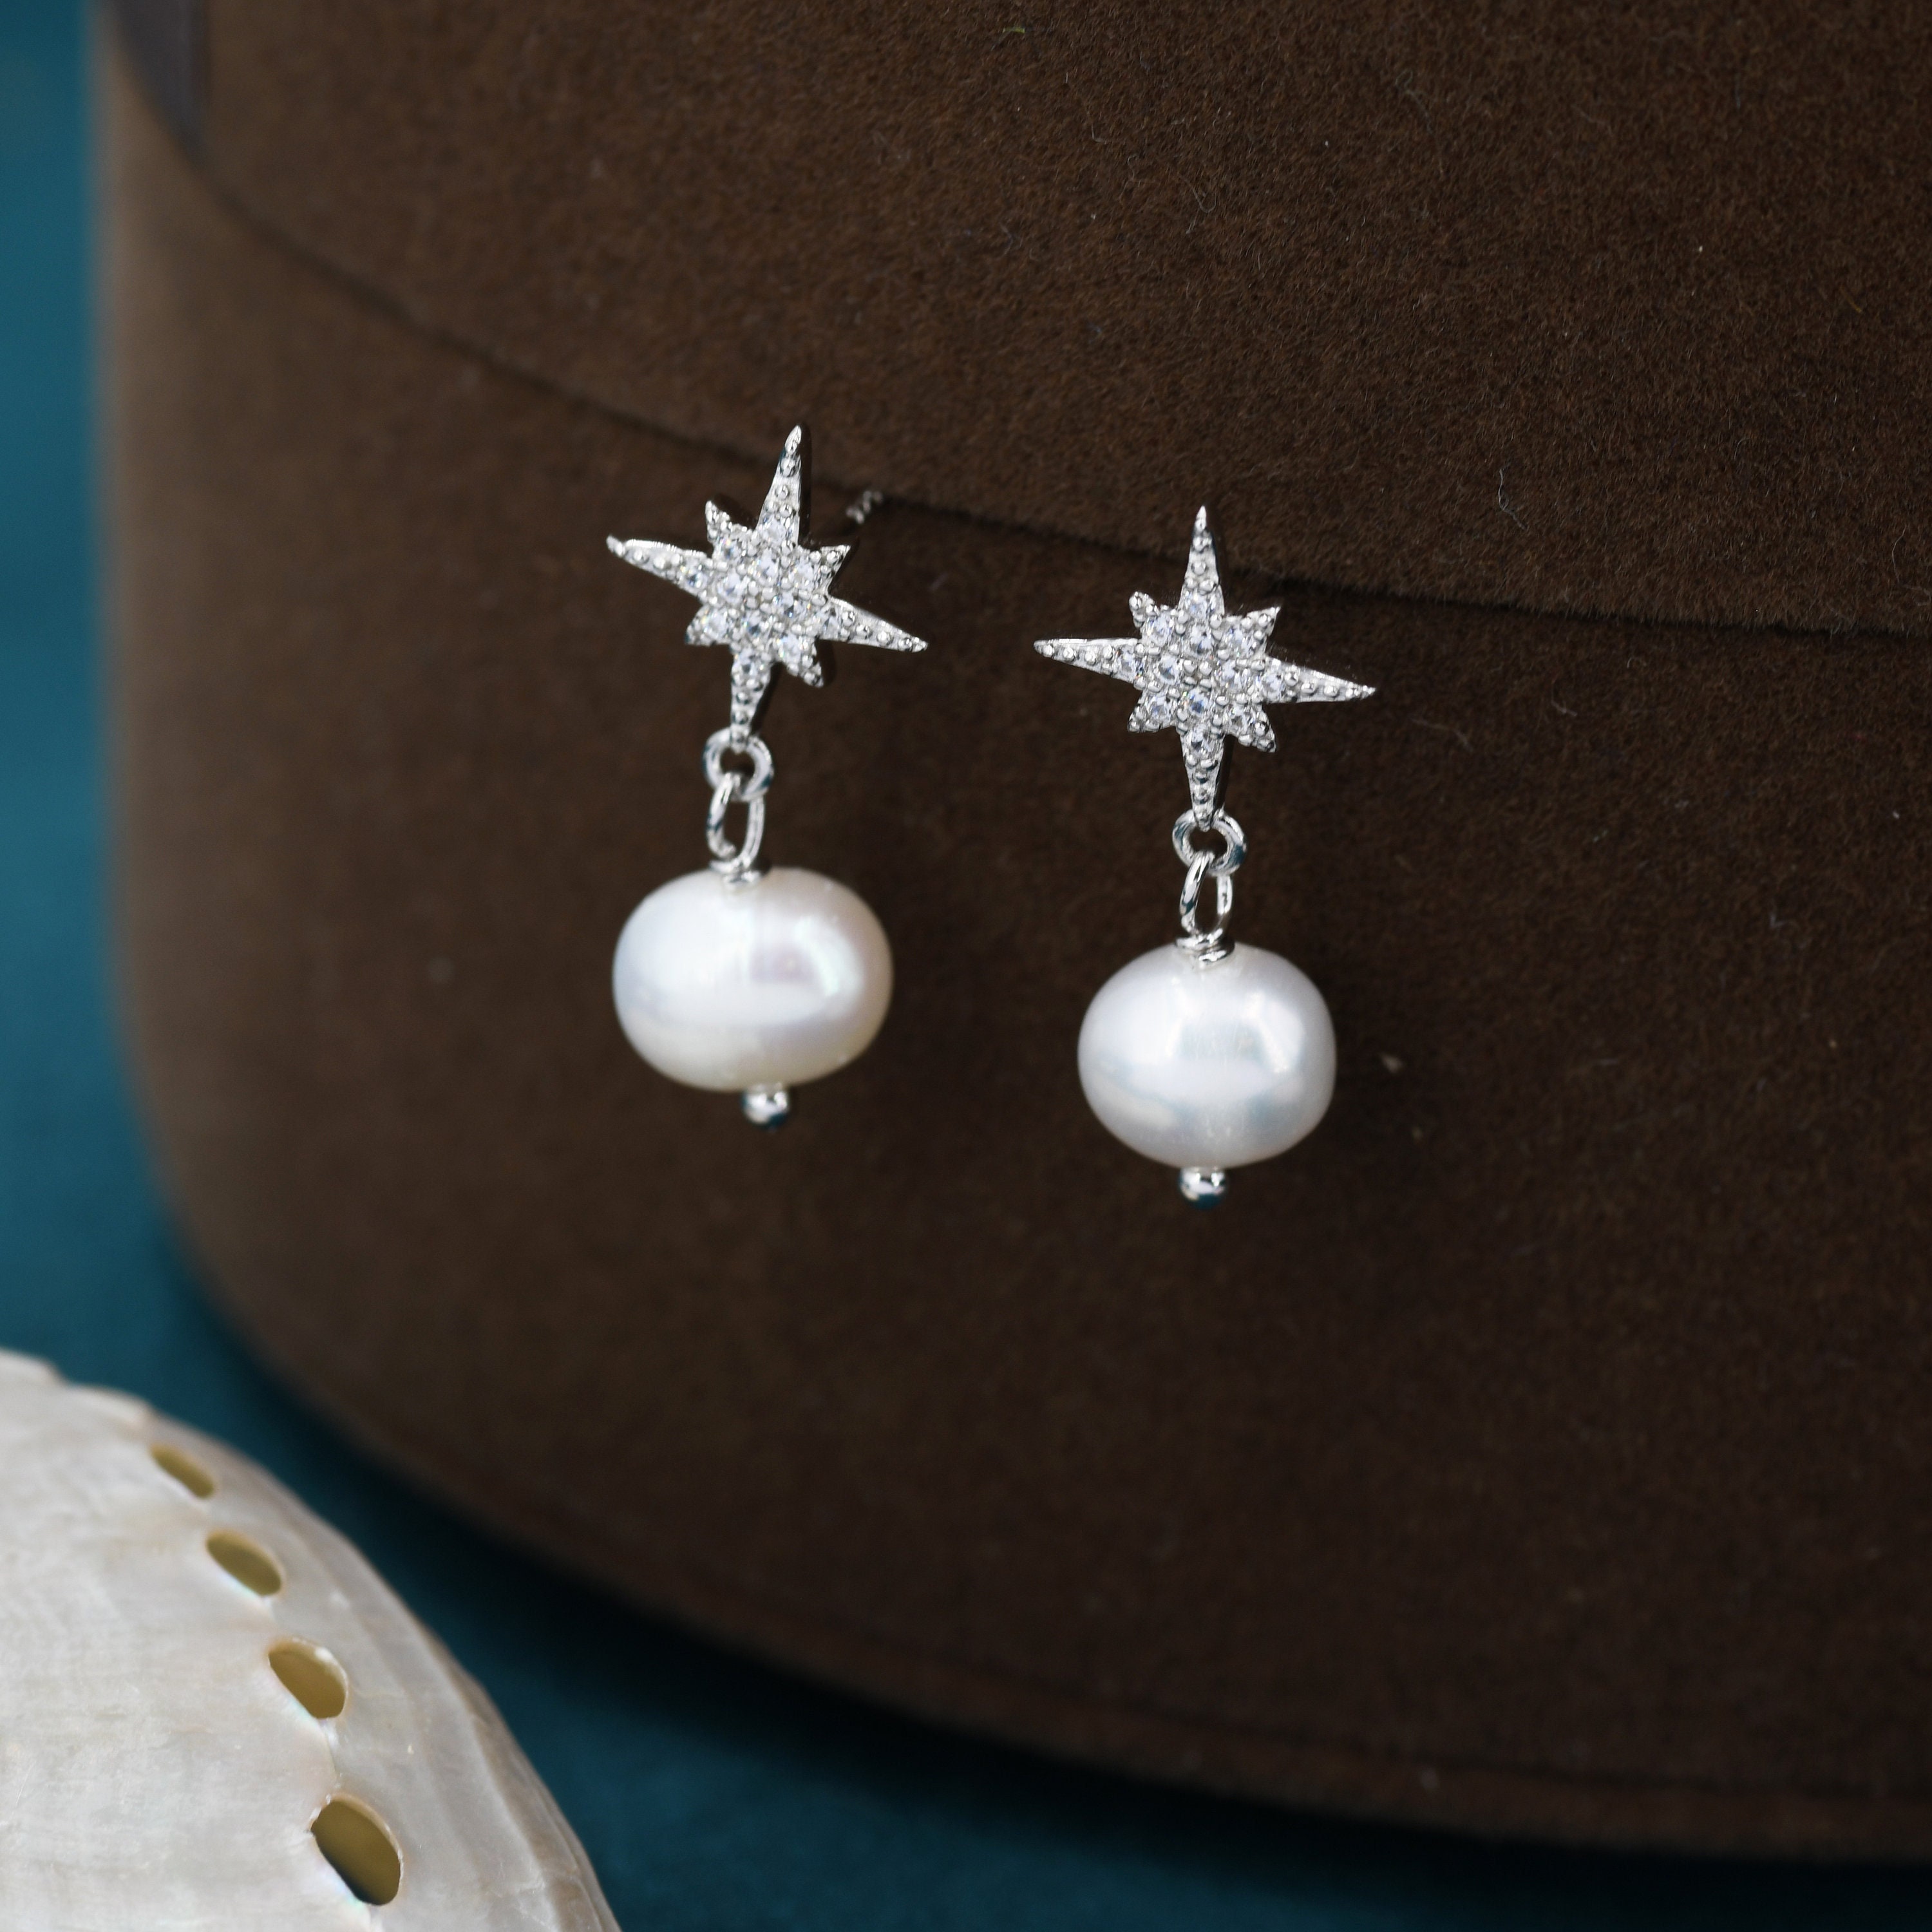 Starburst Star With Dangling Baroque Pearl Drop Earrings in Sterling  Silver, Silver or Gold, Keshi Pearl Earrings, -  Denmark